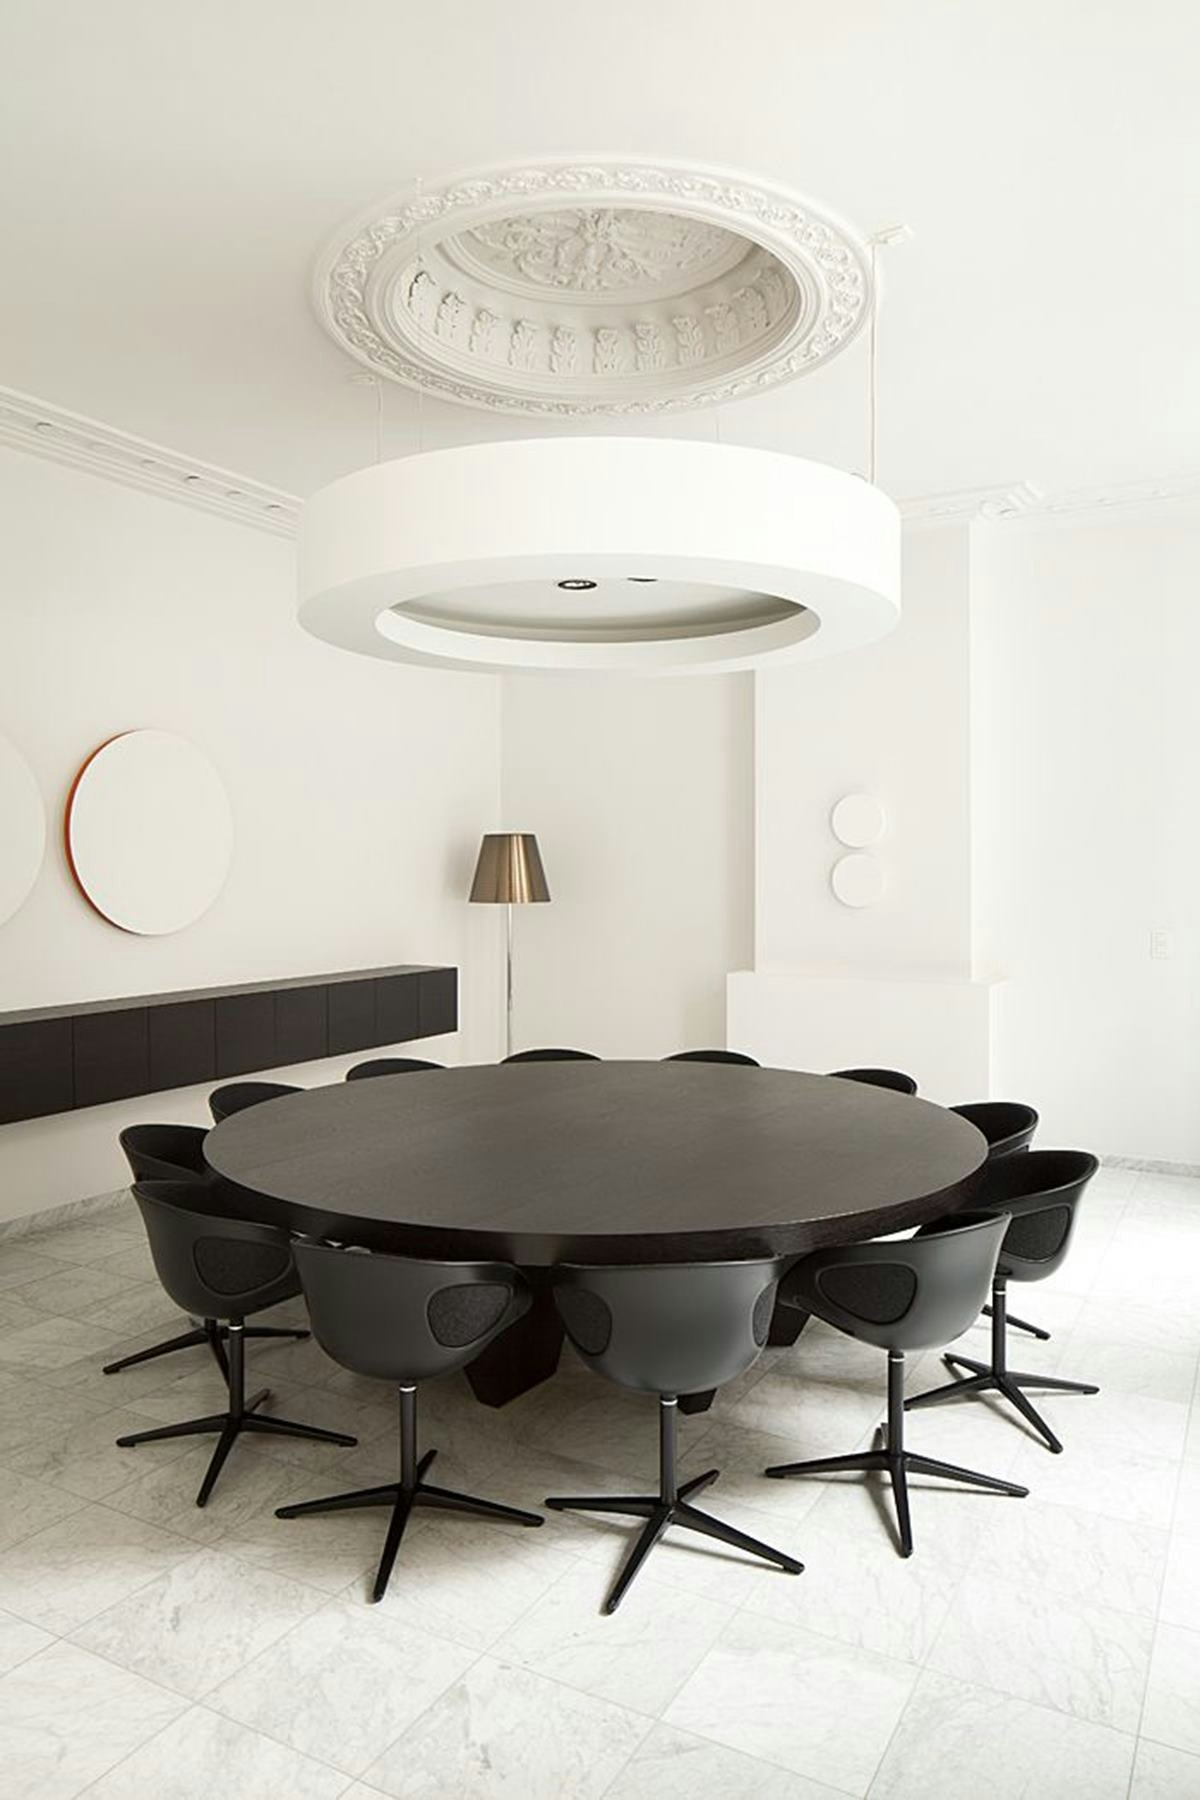 This minimalist, monochrome room